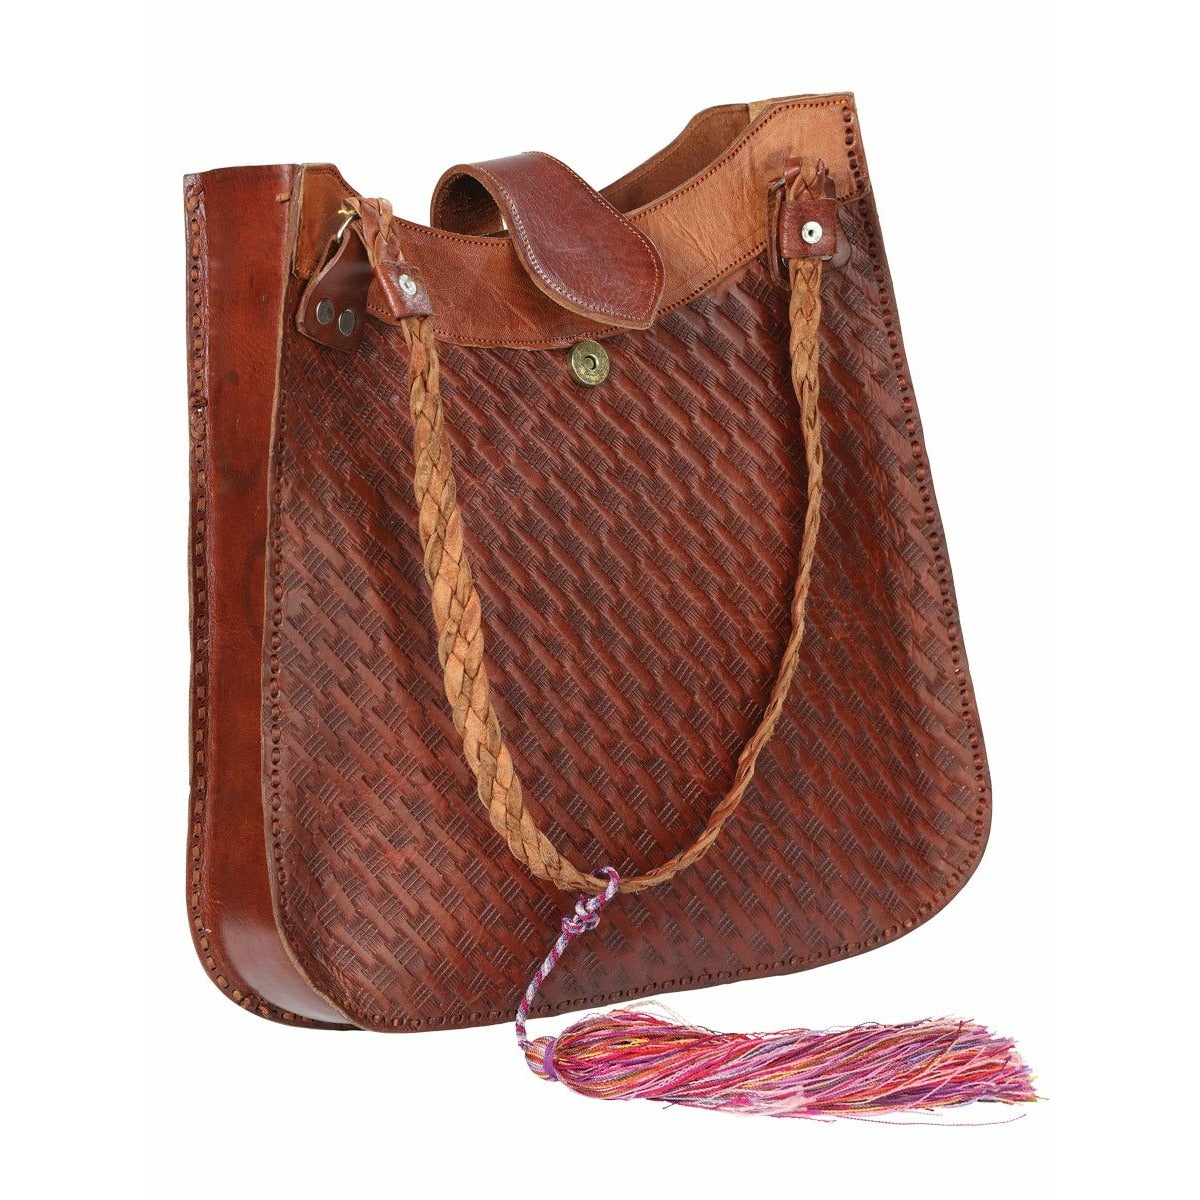 Hand made Mexican leather bag - CharroAzteca.com